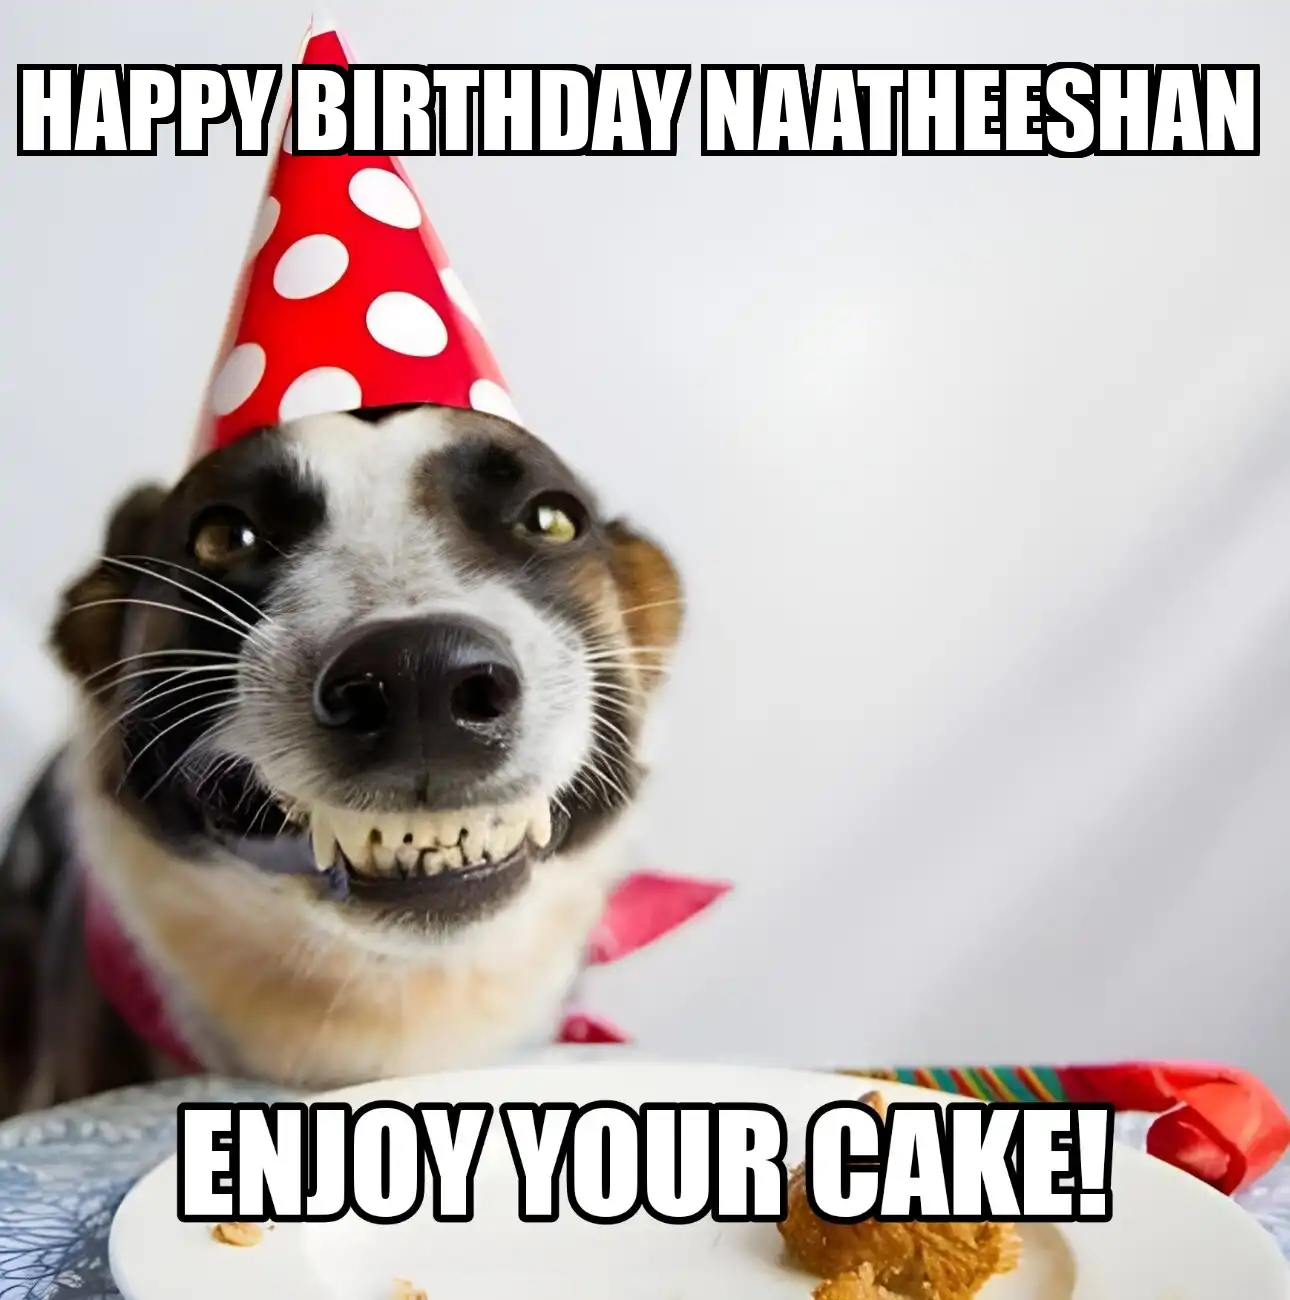 Happy Birthday Naatheeshan Enjoy Your Cake Dog Meme